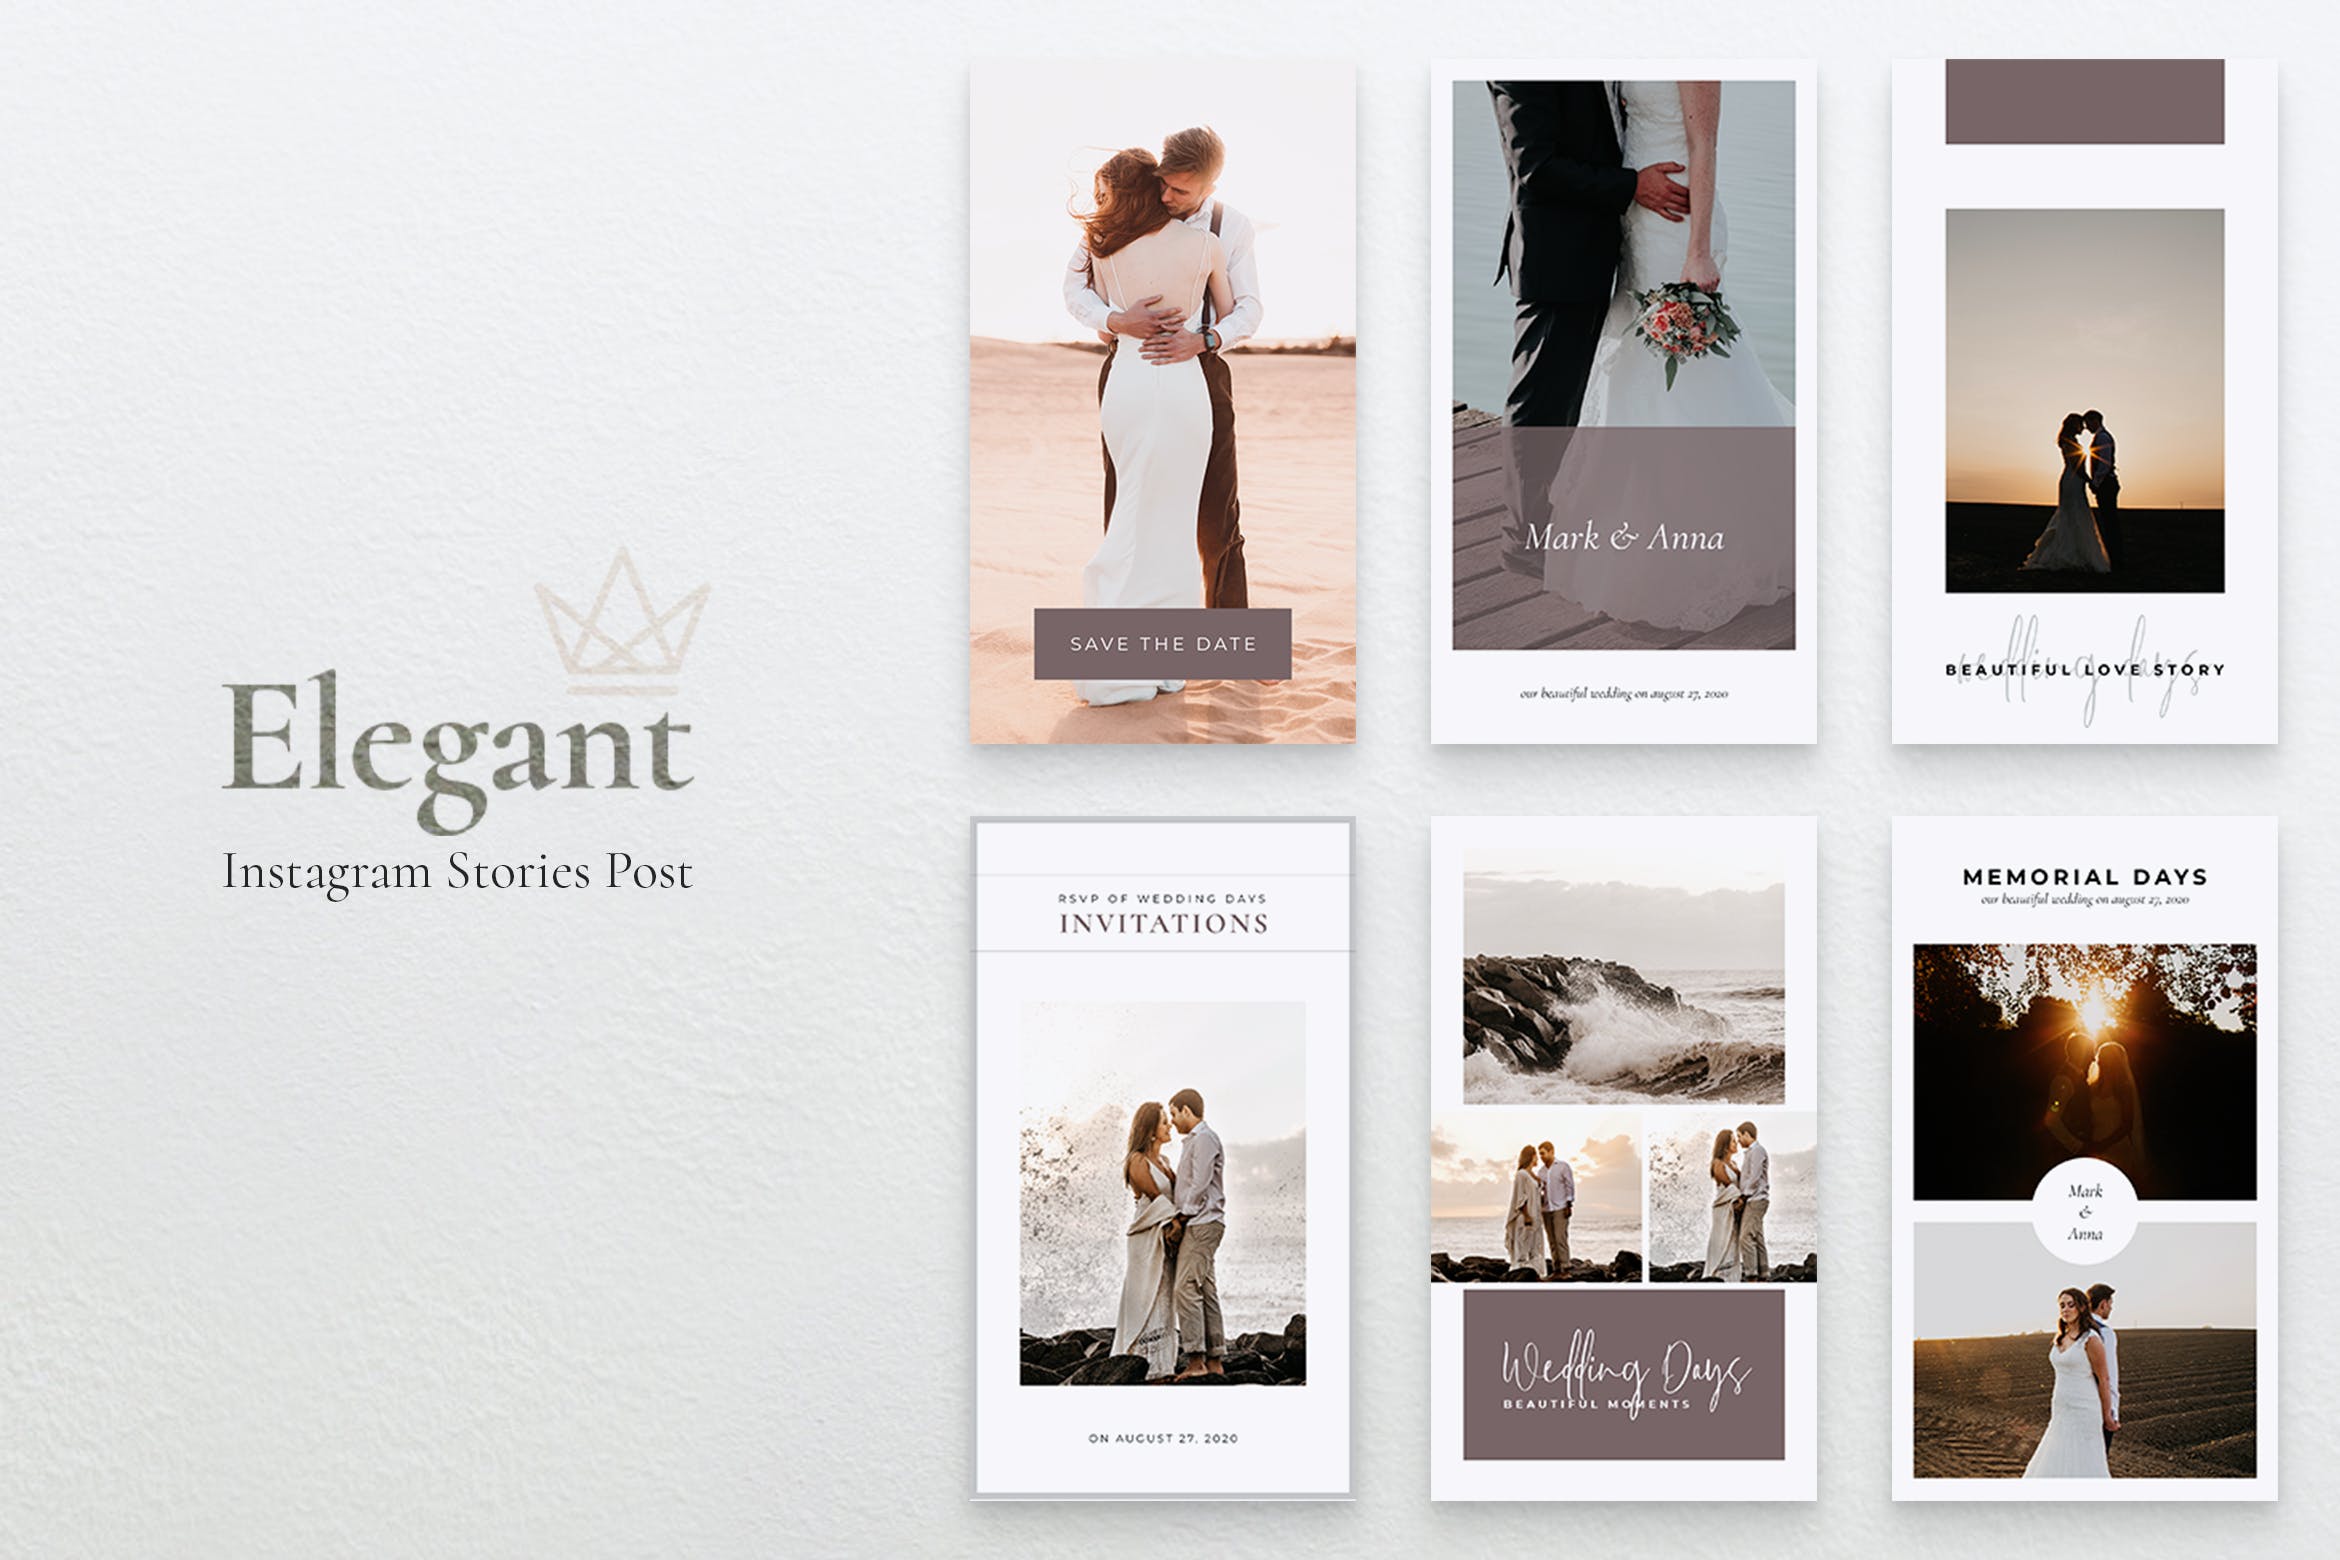 优雅风格婚礼主题Instagram社交素材 ELEGANT Wedding Instagram Stories插图